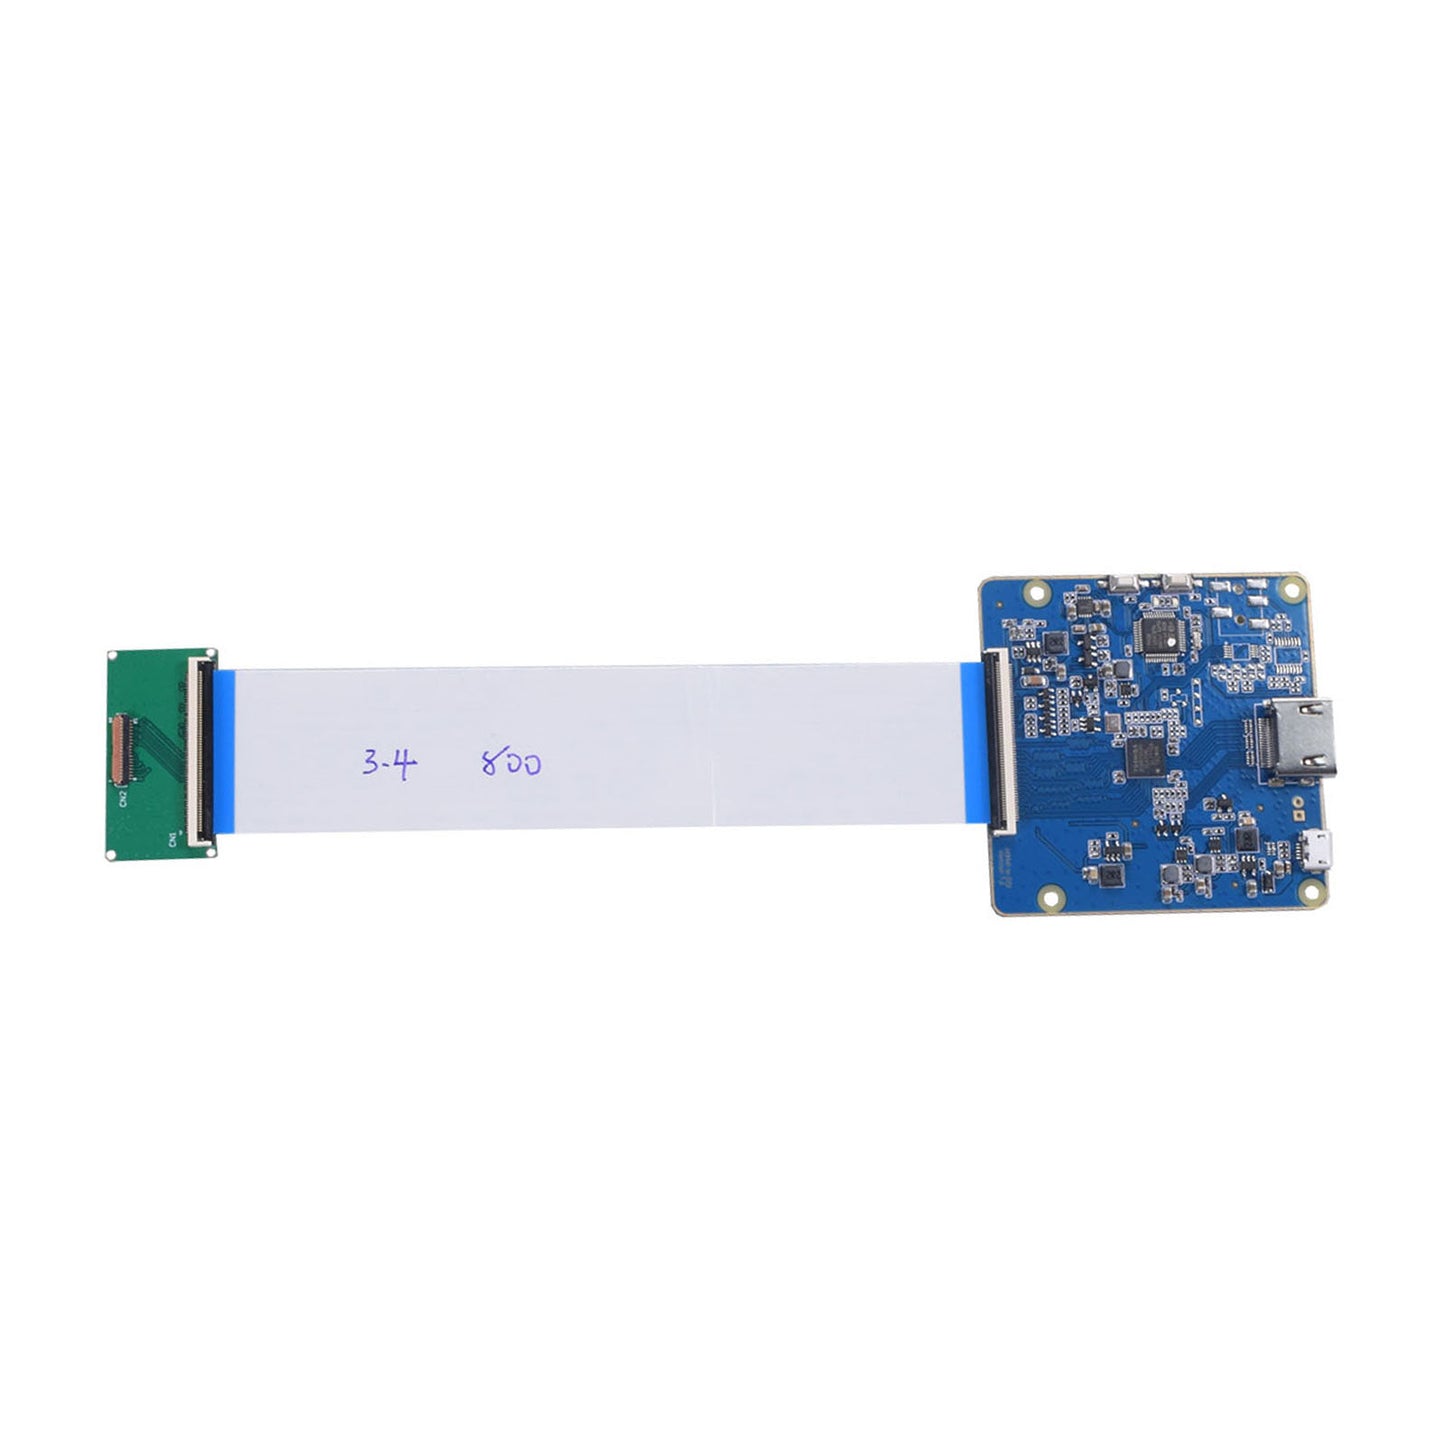 DisplayModule Display Adapter for HDMI to MIPI DSI